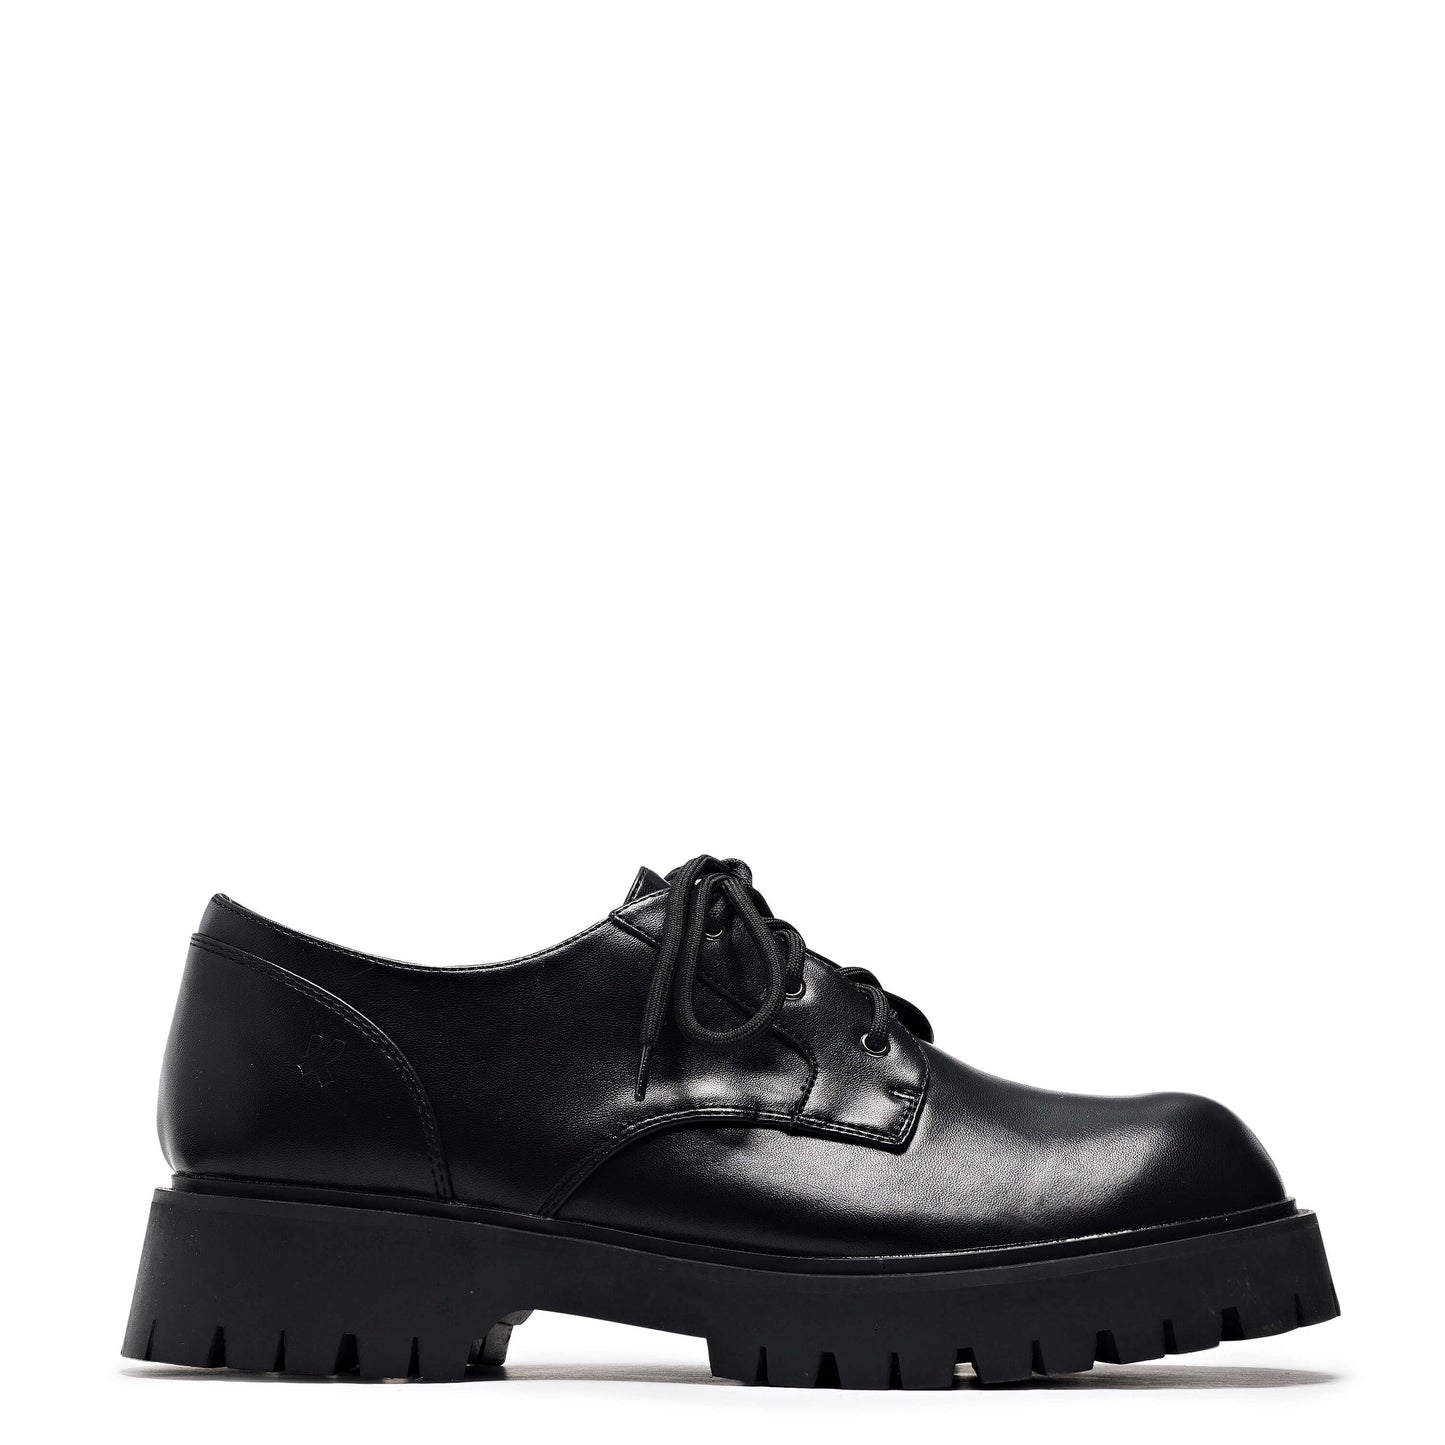 Pinemoon Men's Black Lace Up Shoes - Shoes - KOI Footwear - Black - Side View